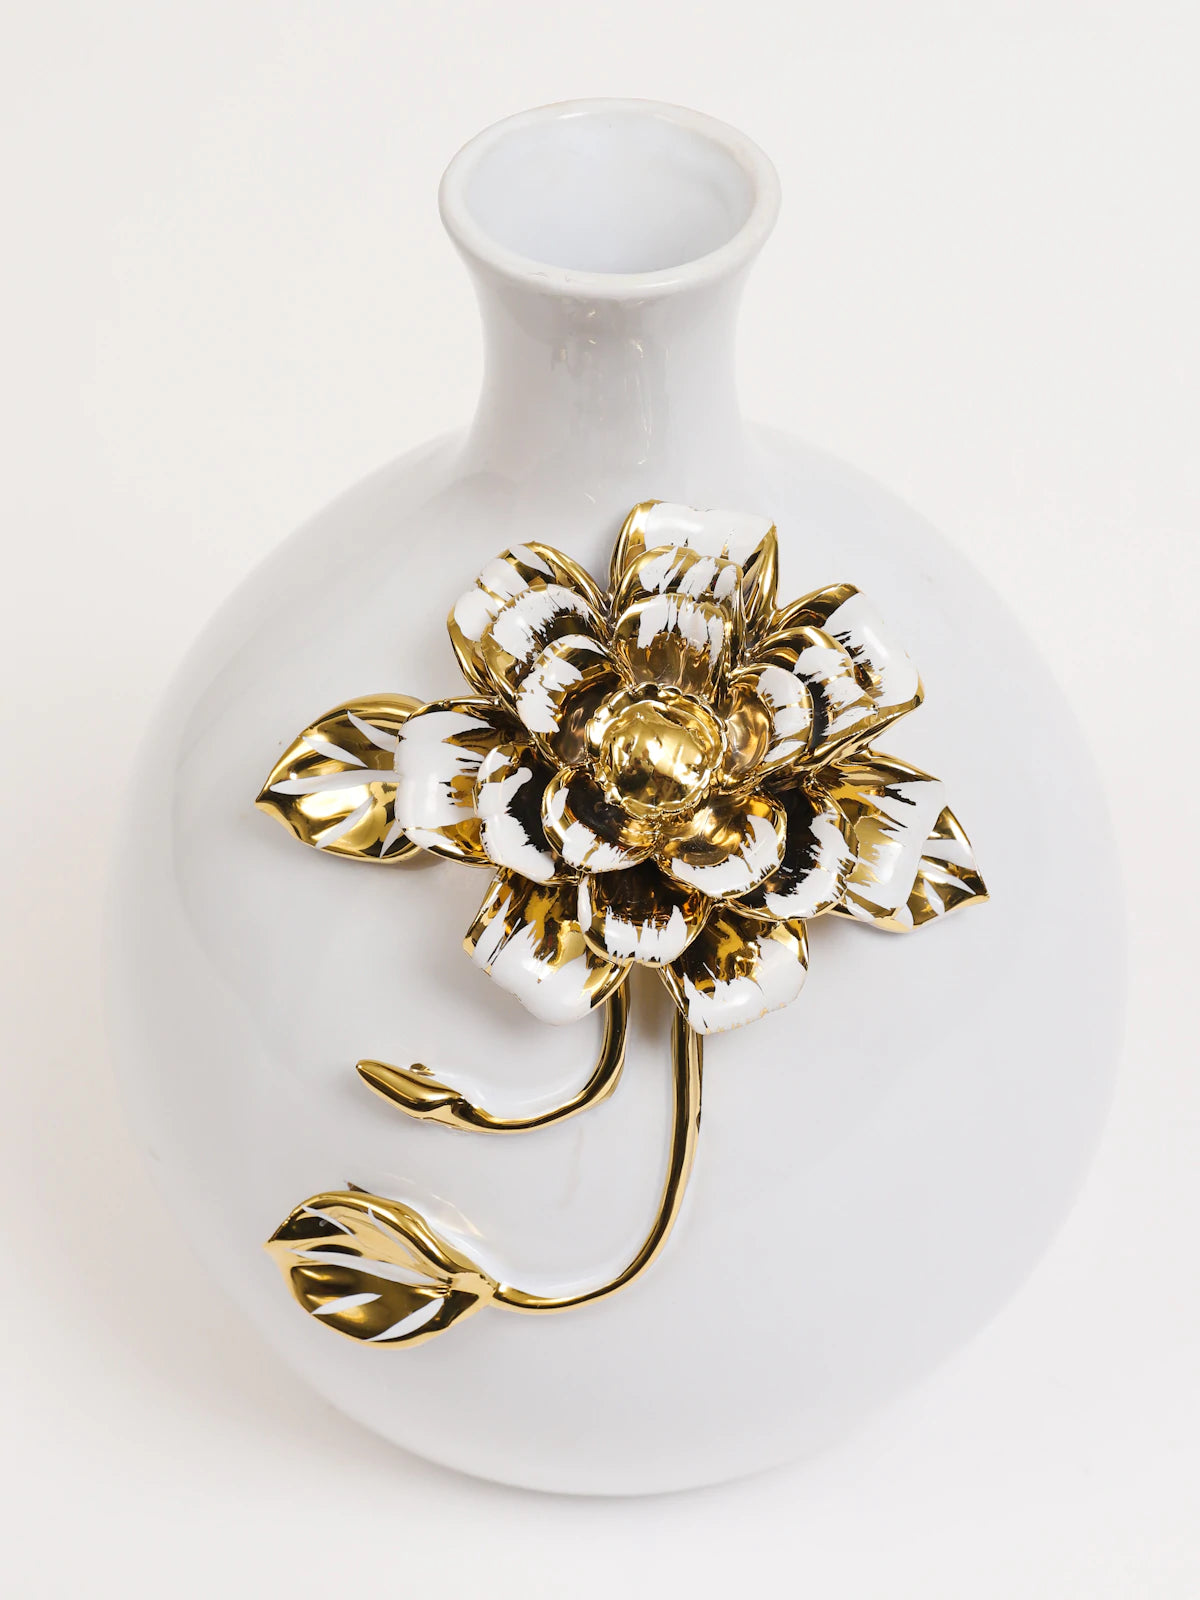 11H Luxury White Decorative Vase with Gold Flower Design - KYA Home Decor